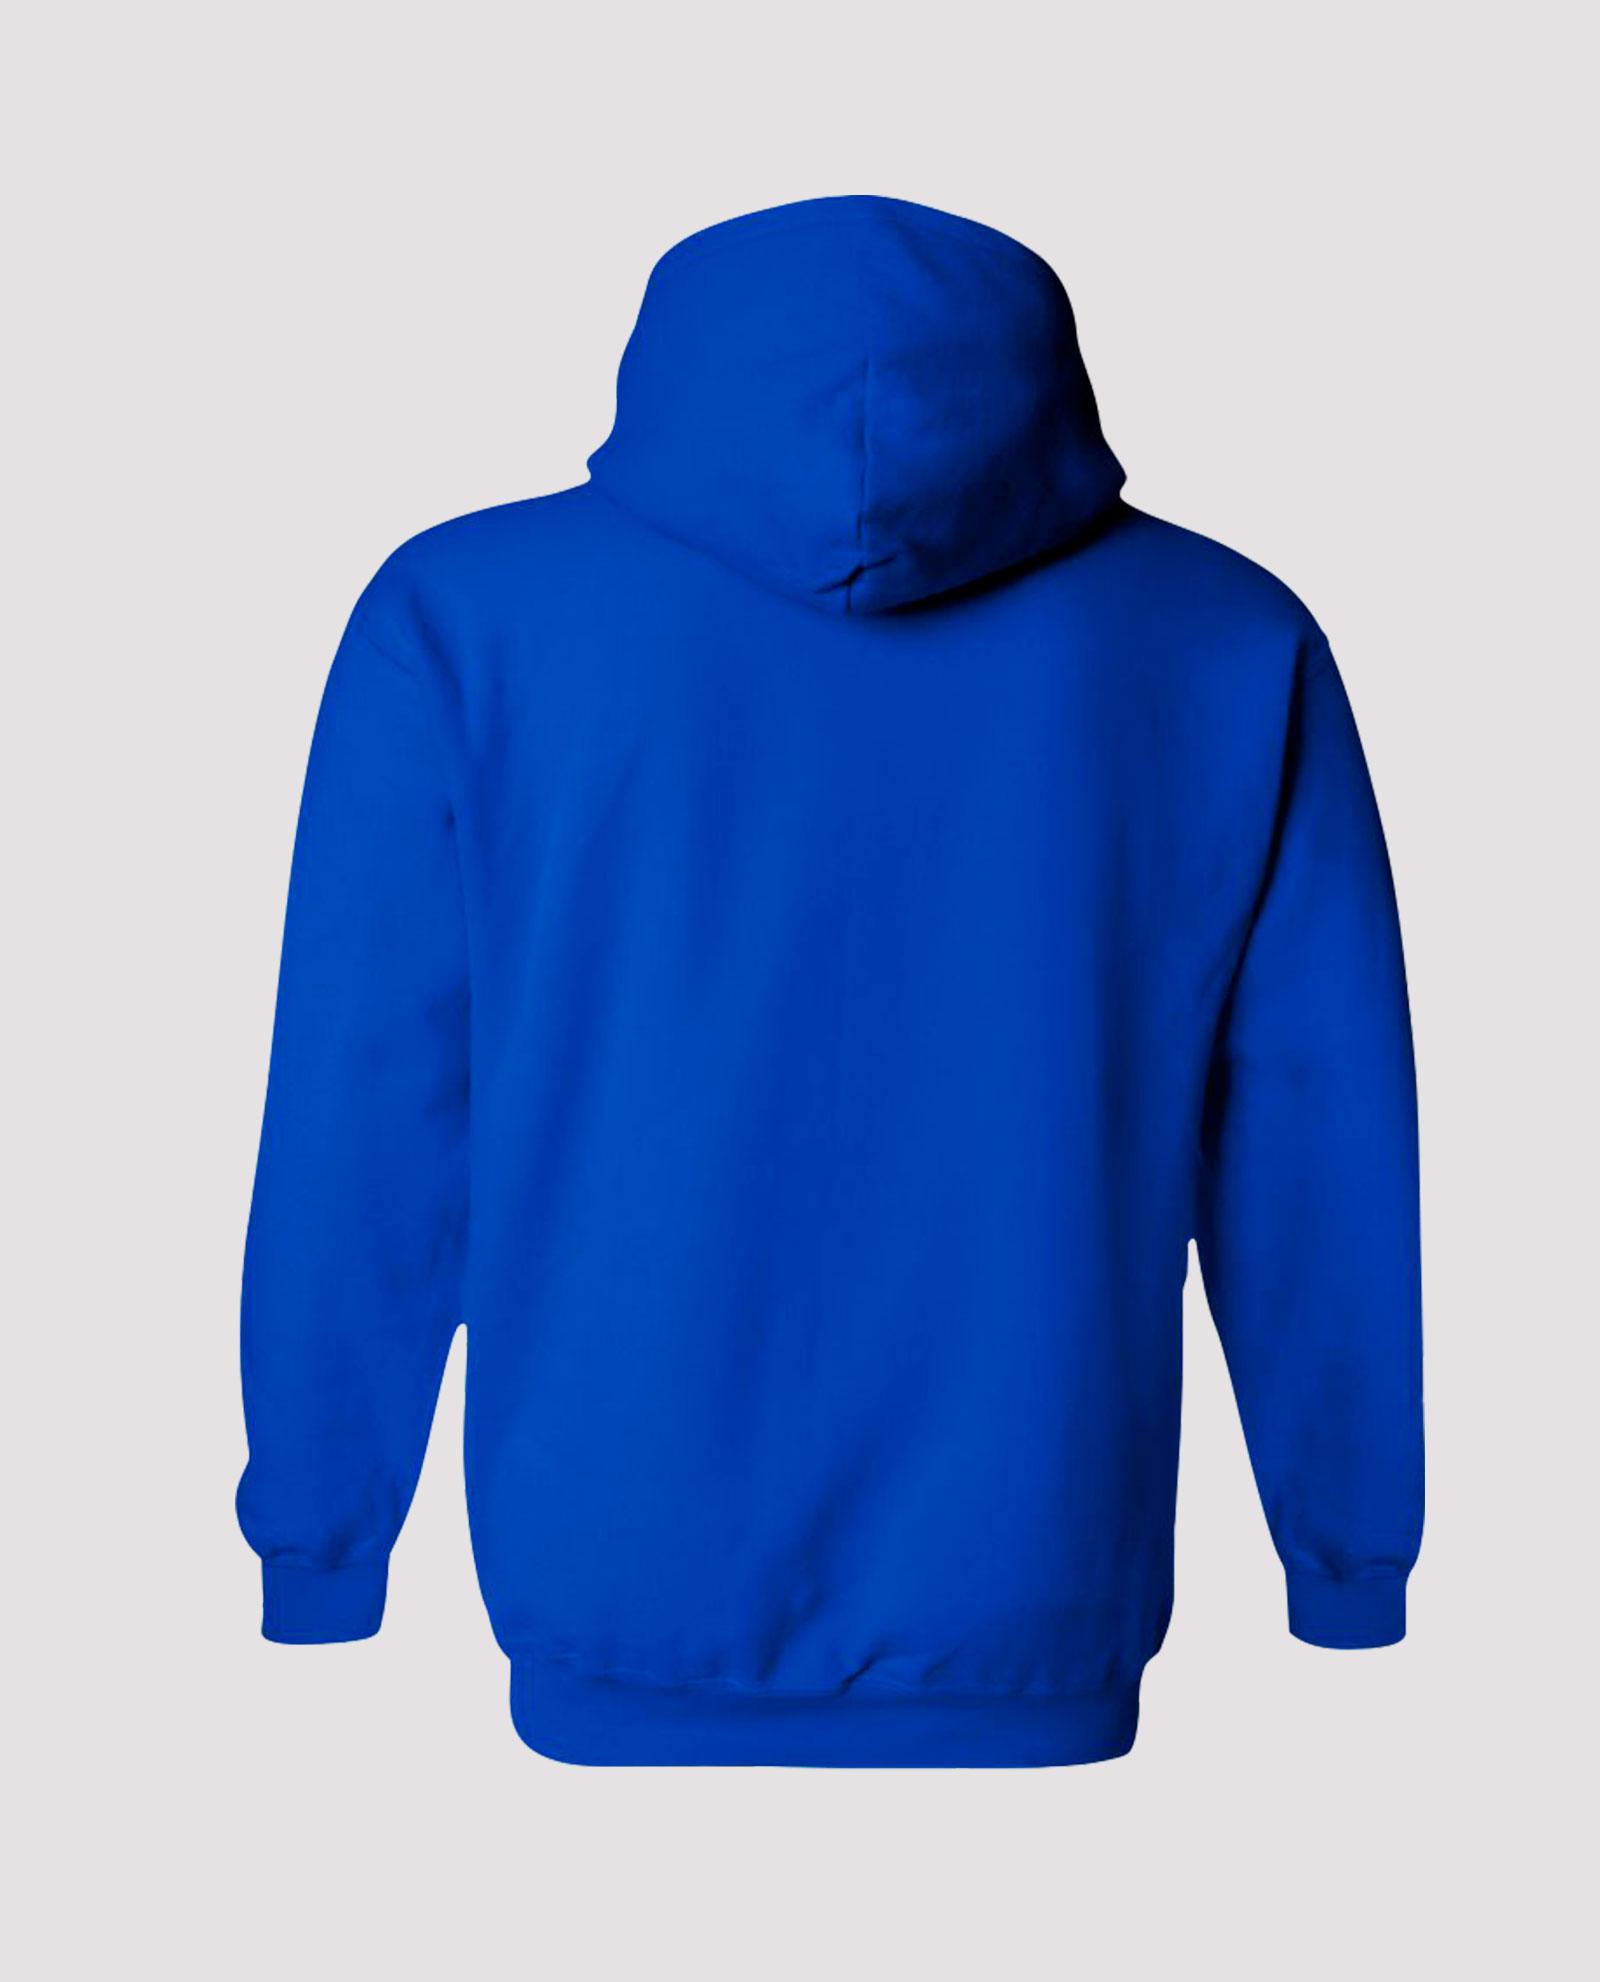 la-ligne-shop-hoodies-sweat-pull-bleu-back-COLLAB-Mansour-barnaoui-SHIBU